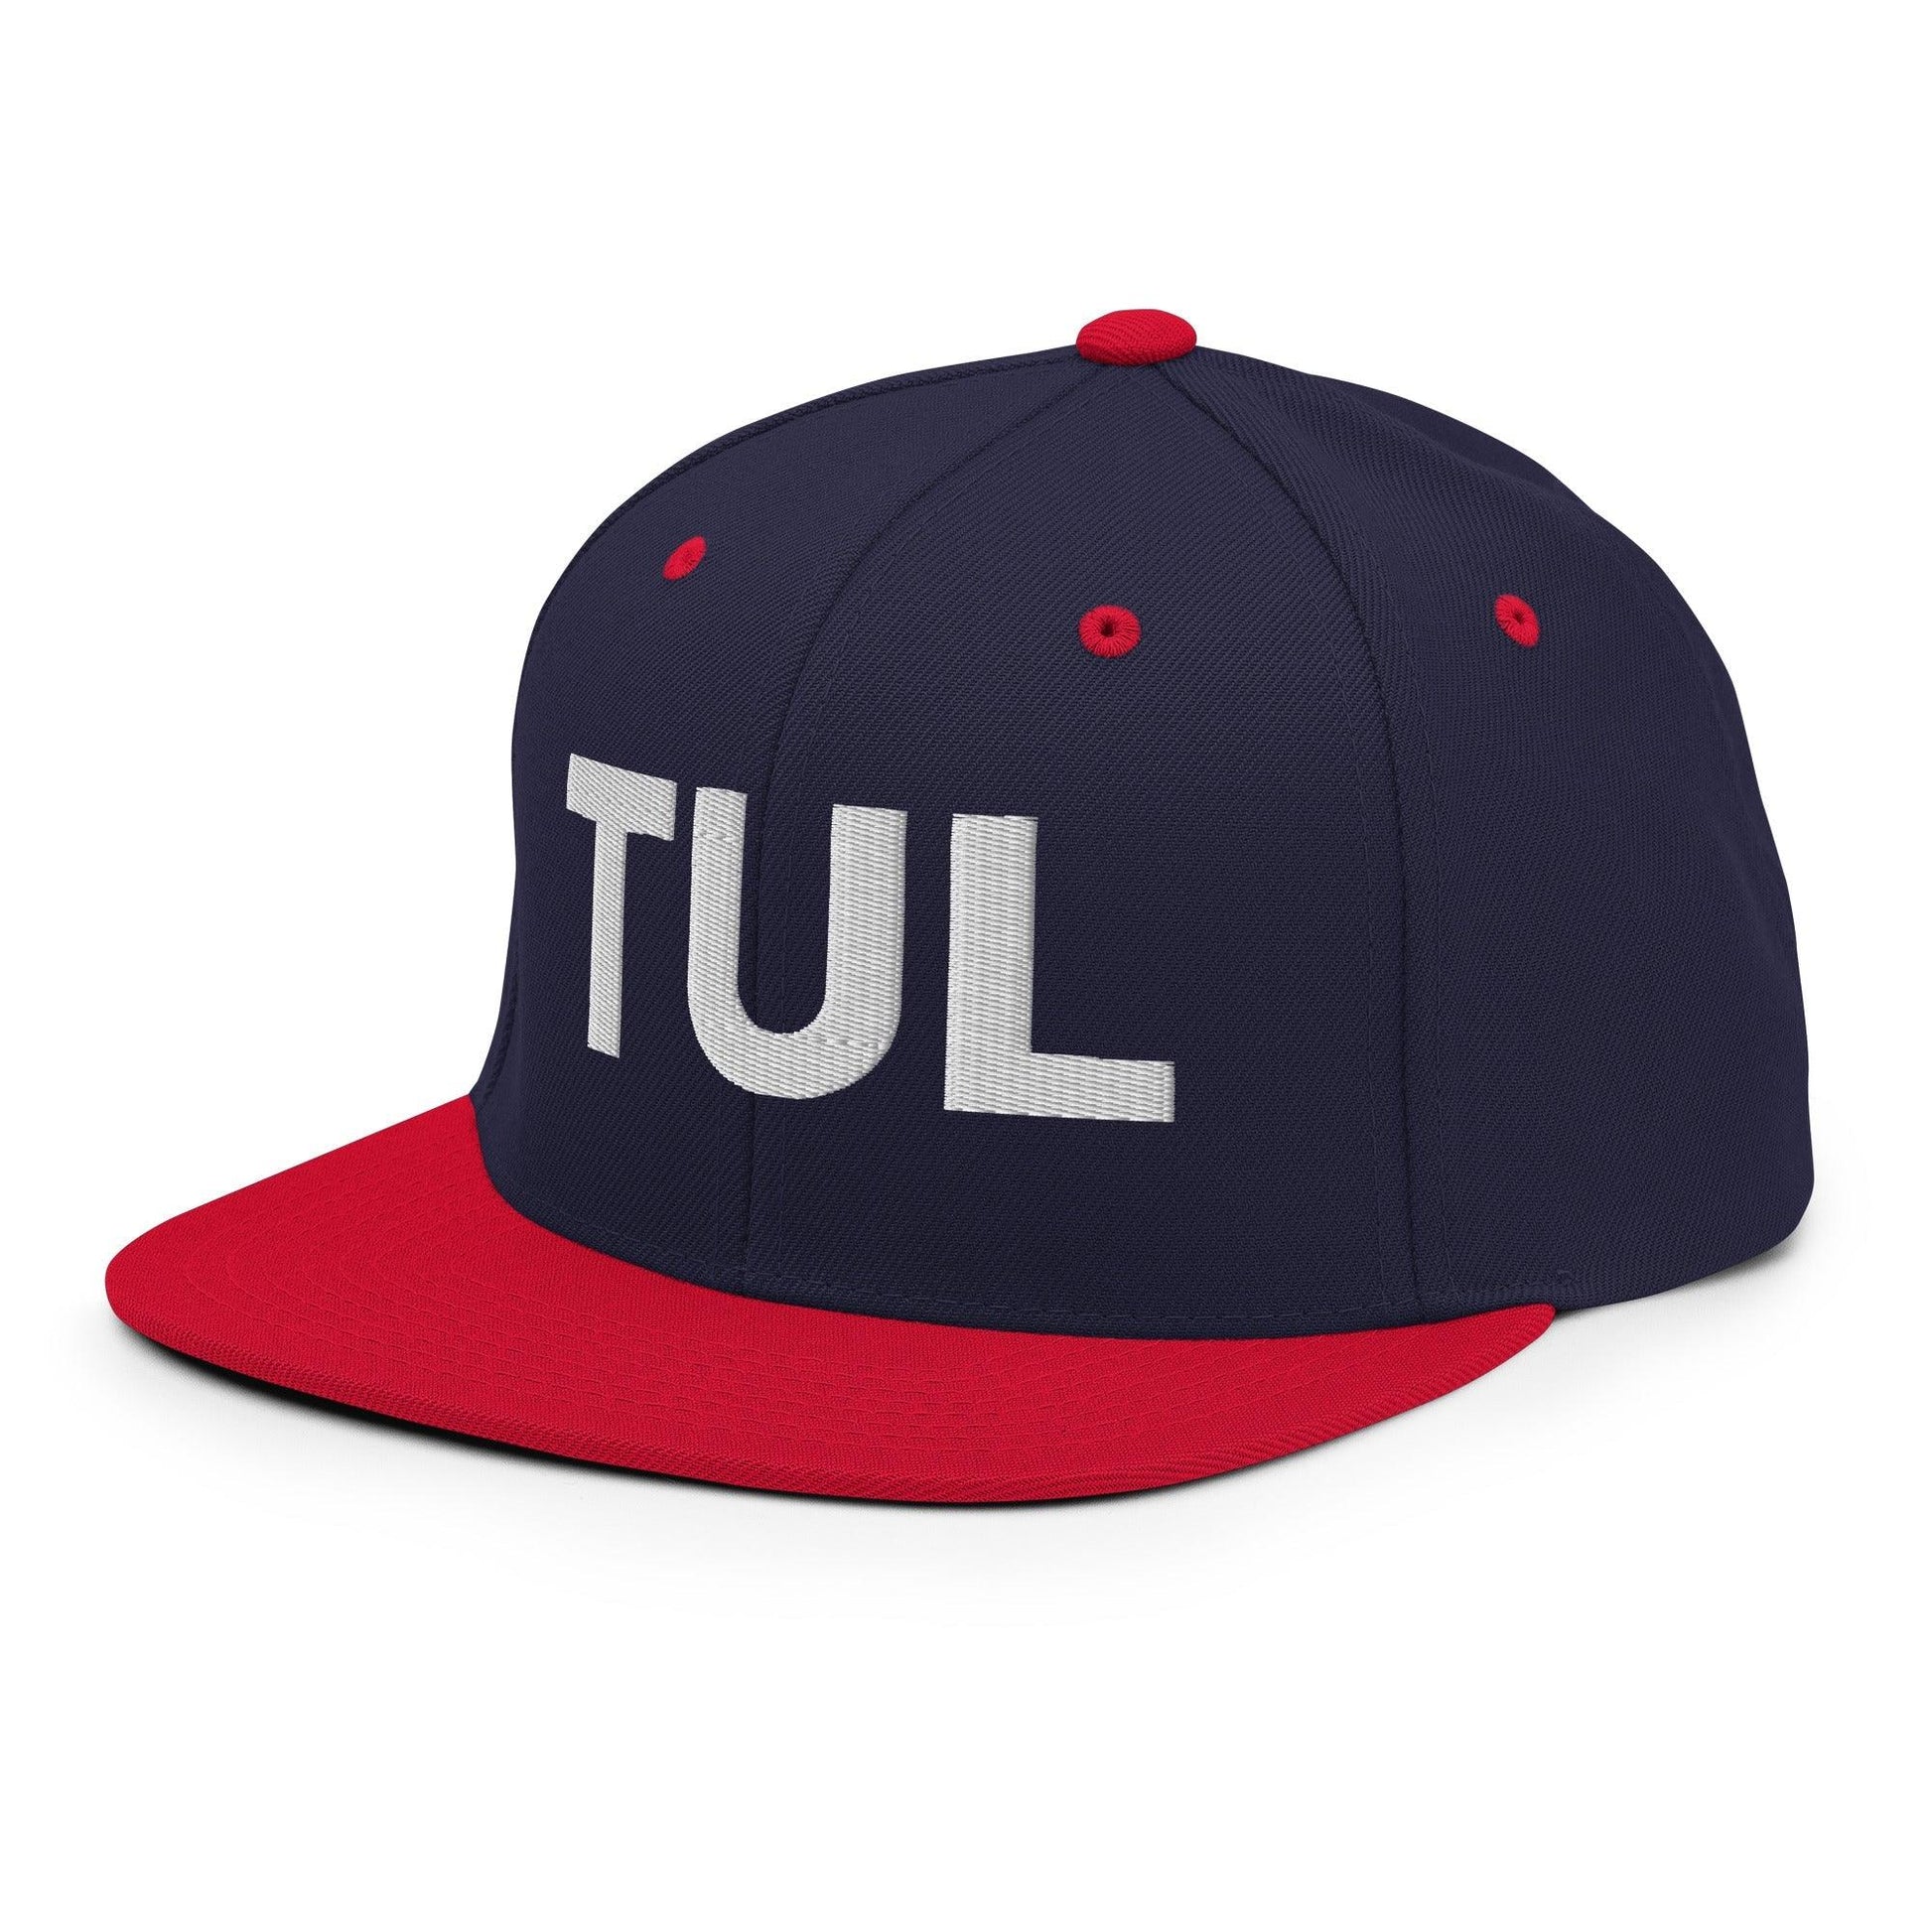 Tulsa TUL Vintage Block Snapback Hat Navy Red